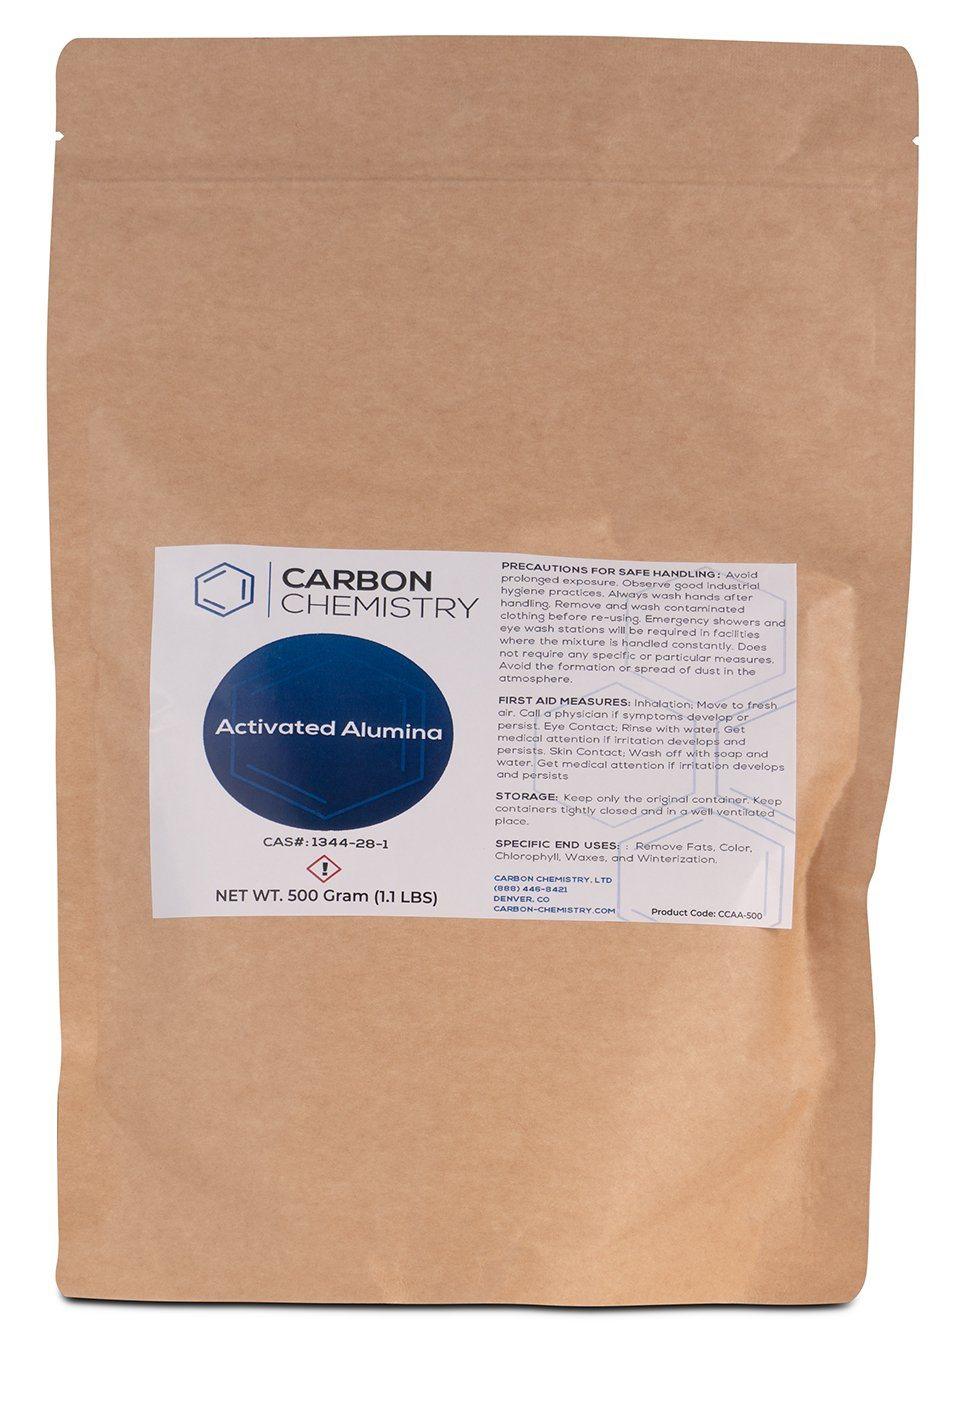 Carbon Chemistry Activated Alumina 14x28 Mesh - Carbon Chemistry LTD High Desert Scientific